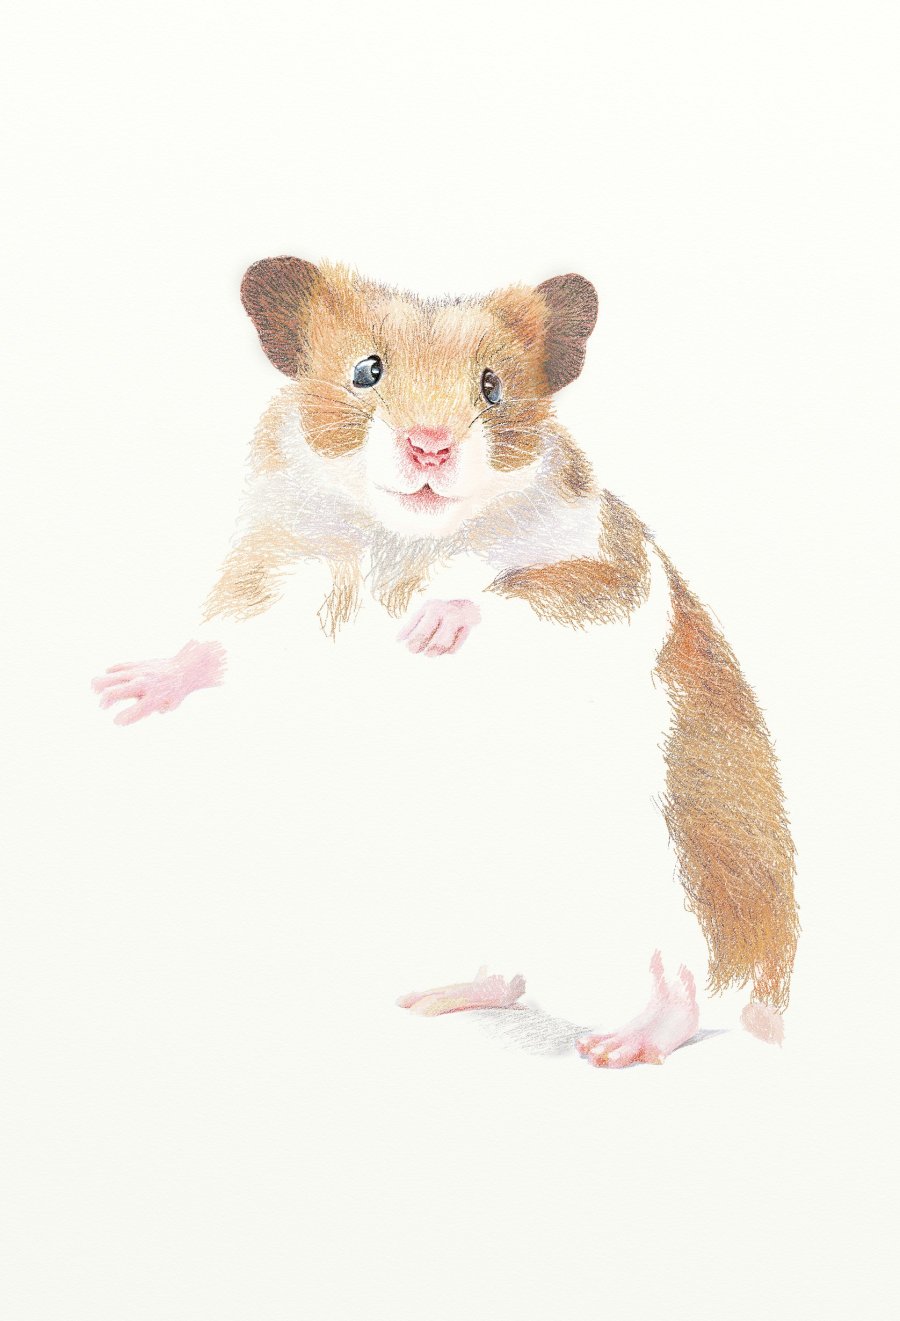 painter绘制一只可爱的小老鼠插画12